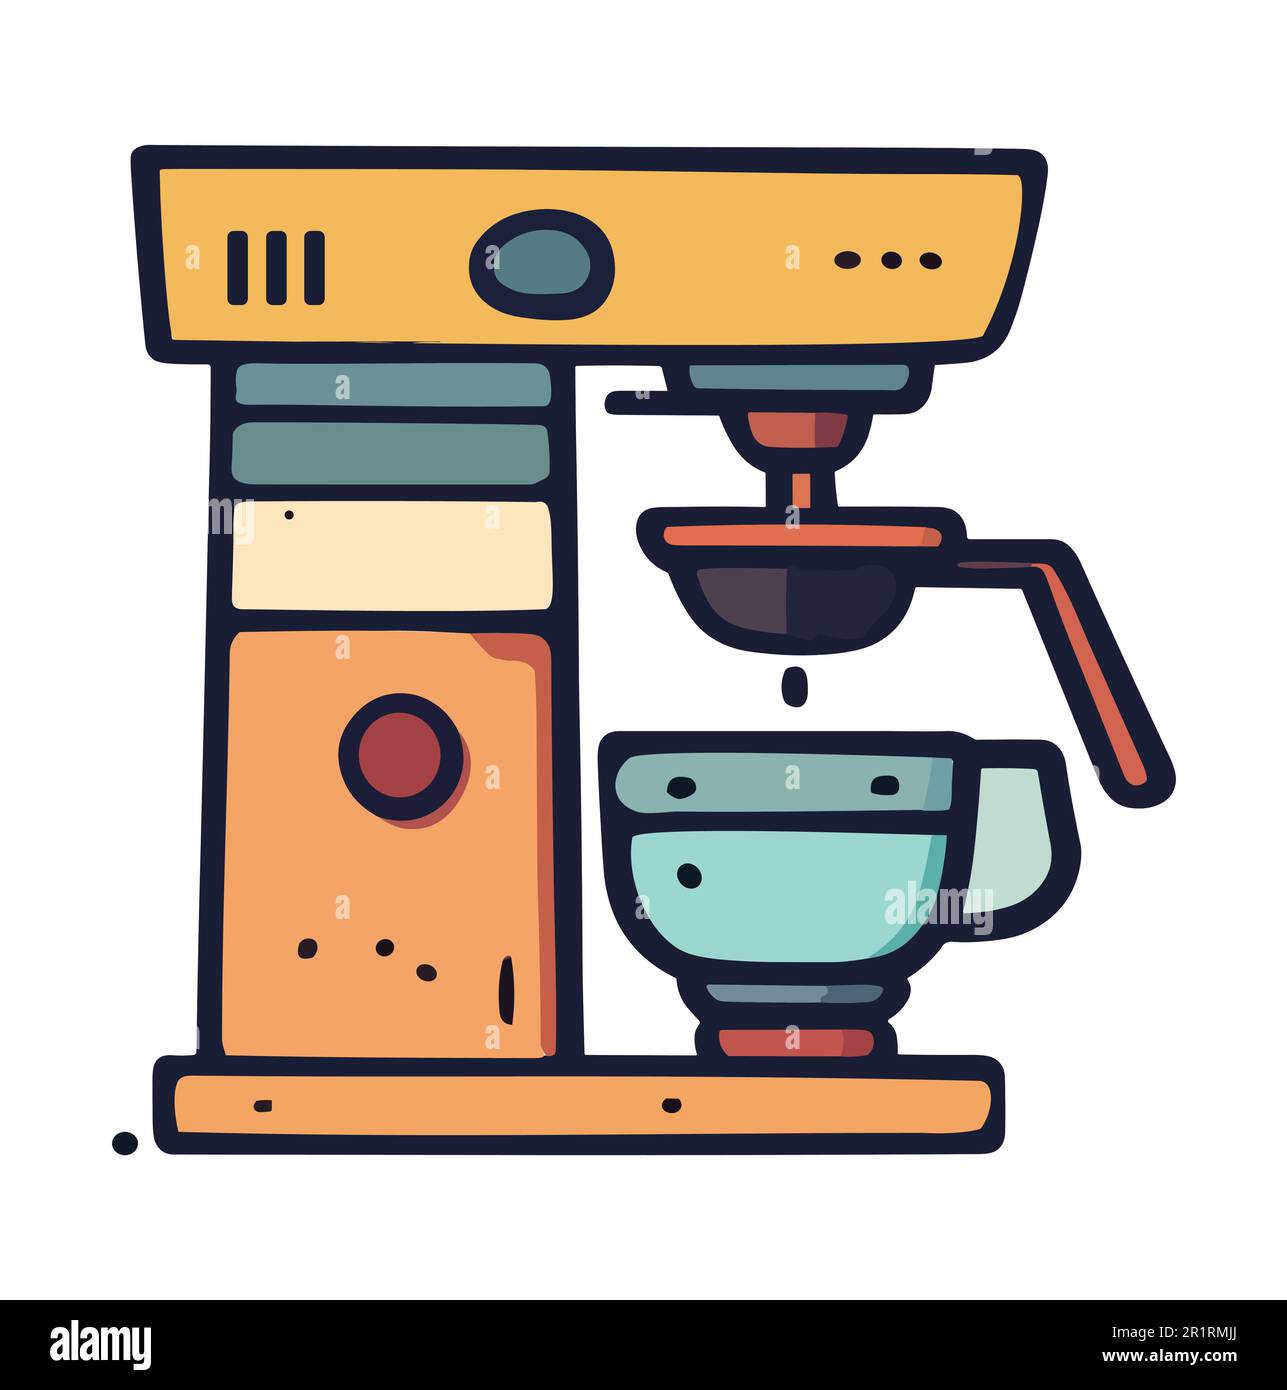 Vintage Coffee Maker for Espresso. Retro Coffee Pot. Camping Coffee  Machine. Metal Coffee Maker, Espresso Pot, 